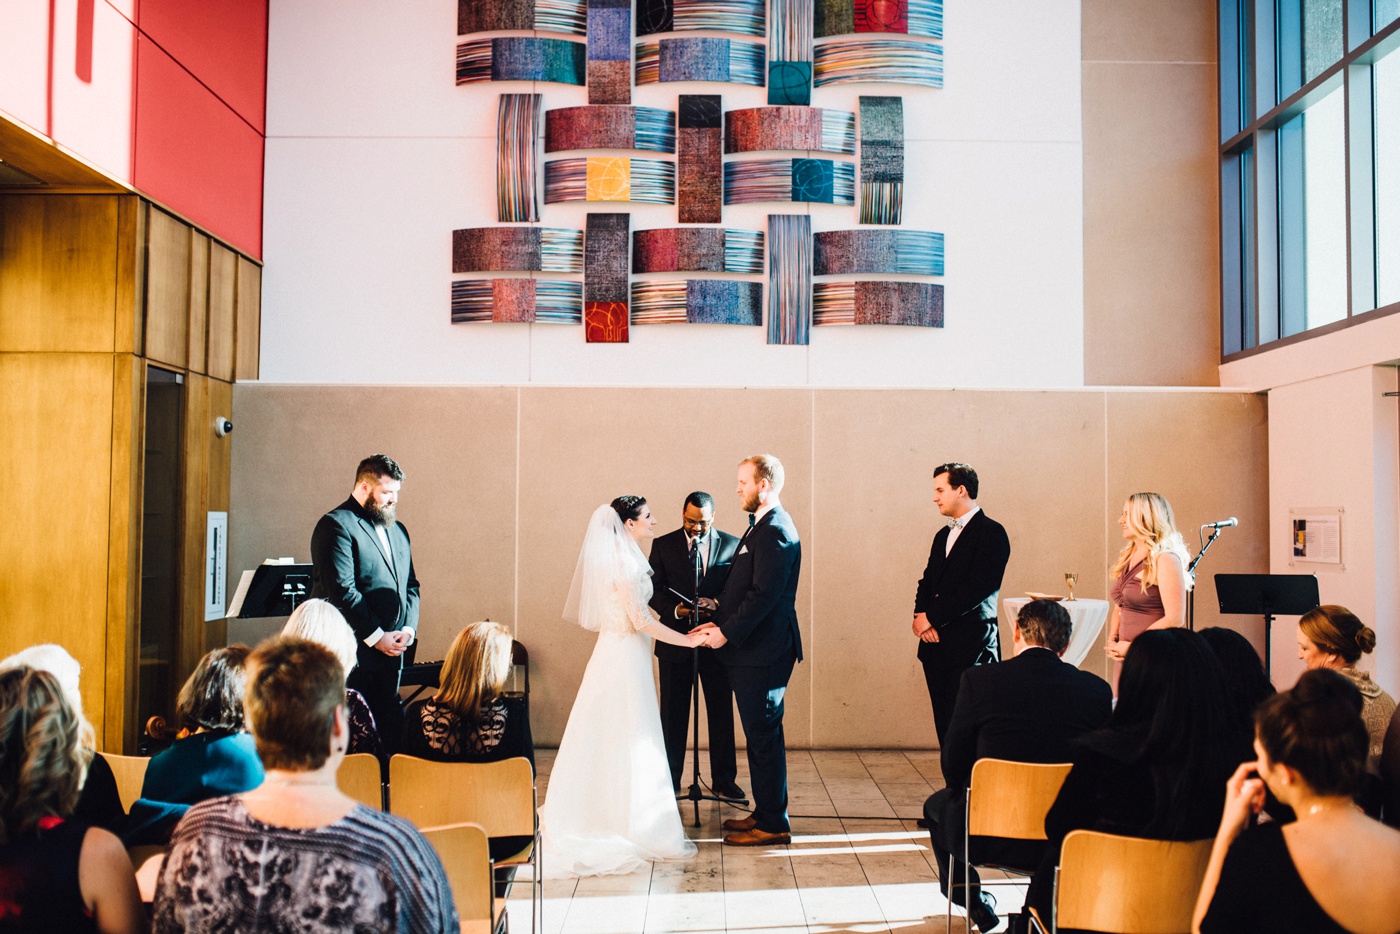 Amy + Jacob - Silver Spring Civic Building Ceremony - Maryland Wedding Photographer - Alison Dunn Photography photo